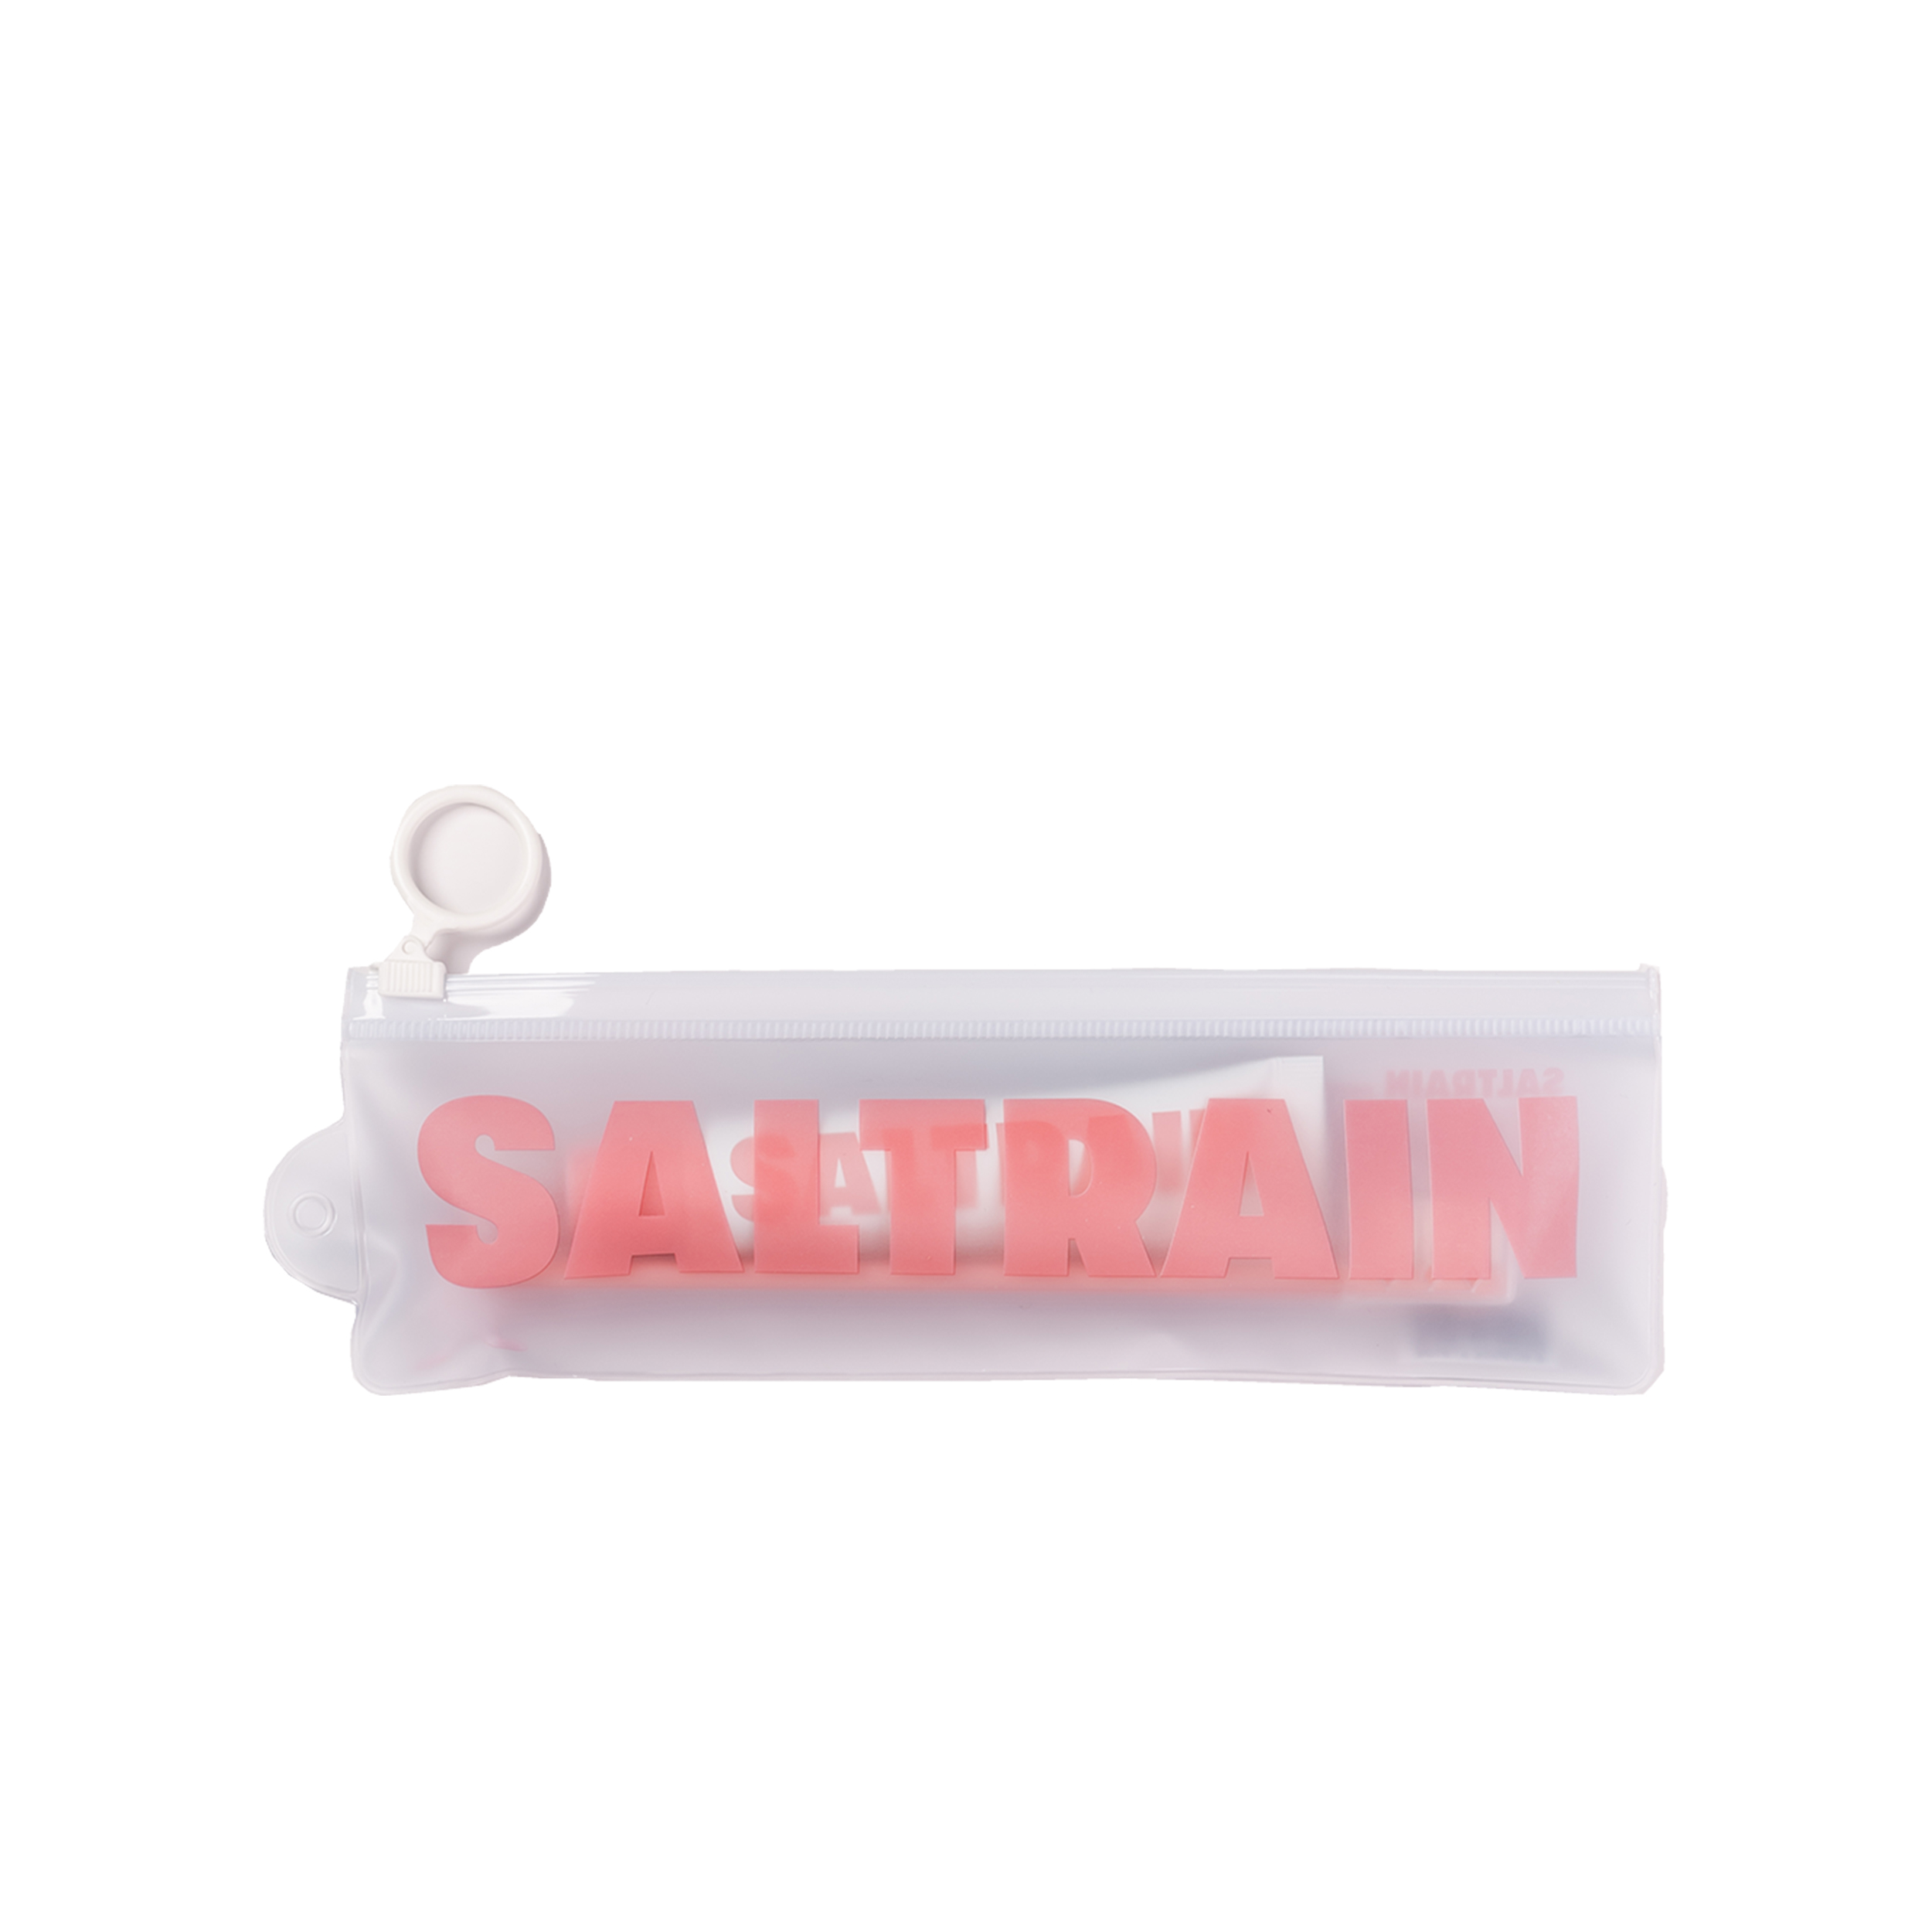 SALTRAIN SALTRAIN Дорожный набор розовый (Зубная паста Rose Citron +зубная щётка) 30 гр АРТ-4916 Дорожный набор розовый (Зубная паста Rose Citron +зубная щётка) 30 гр - фото 1